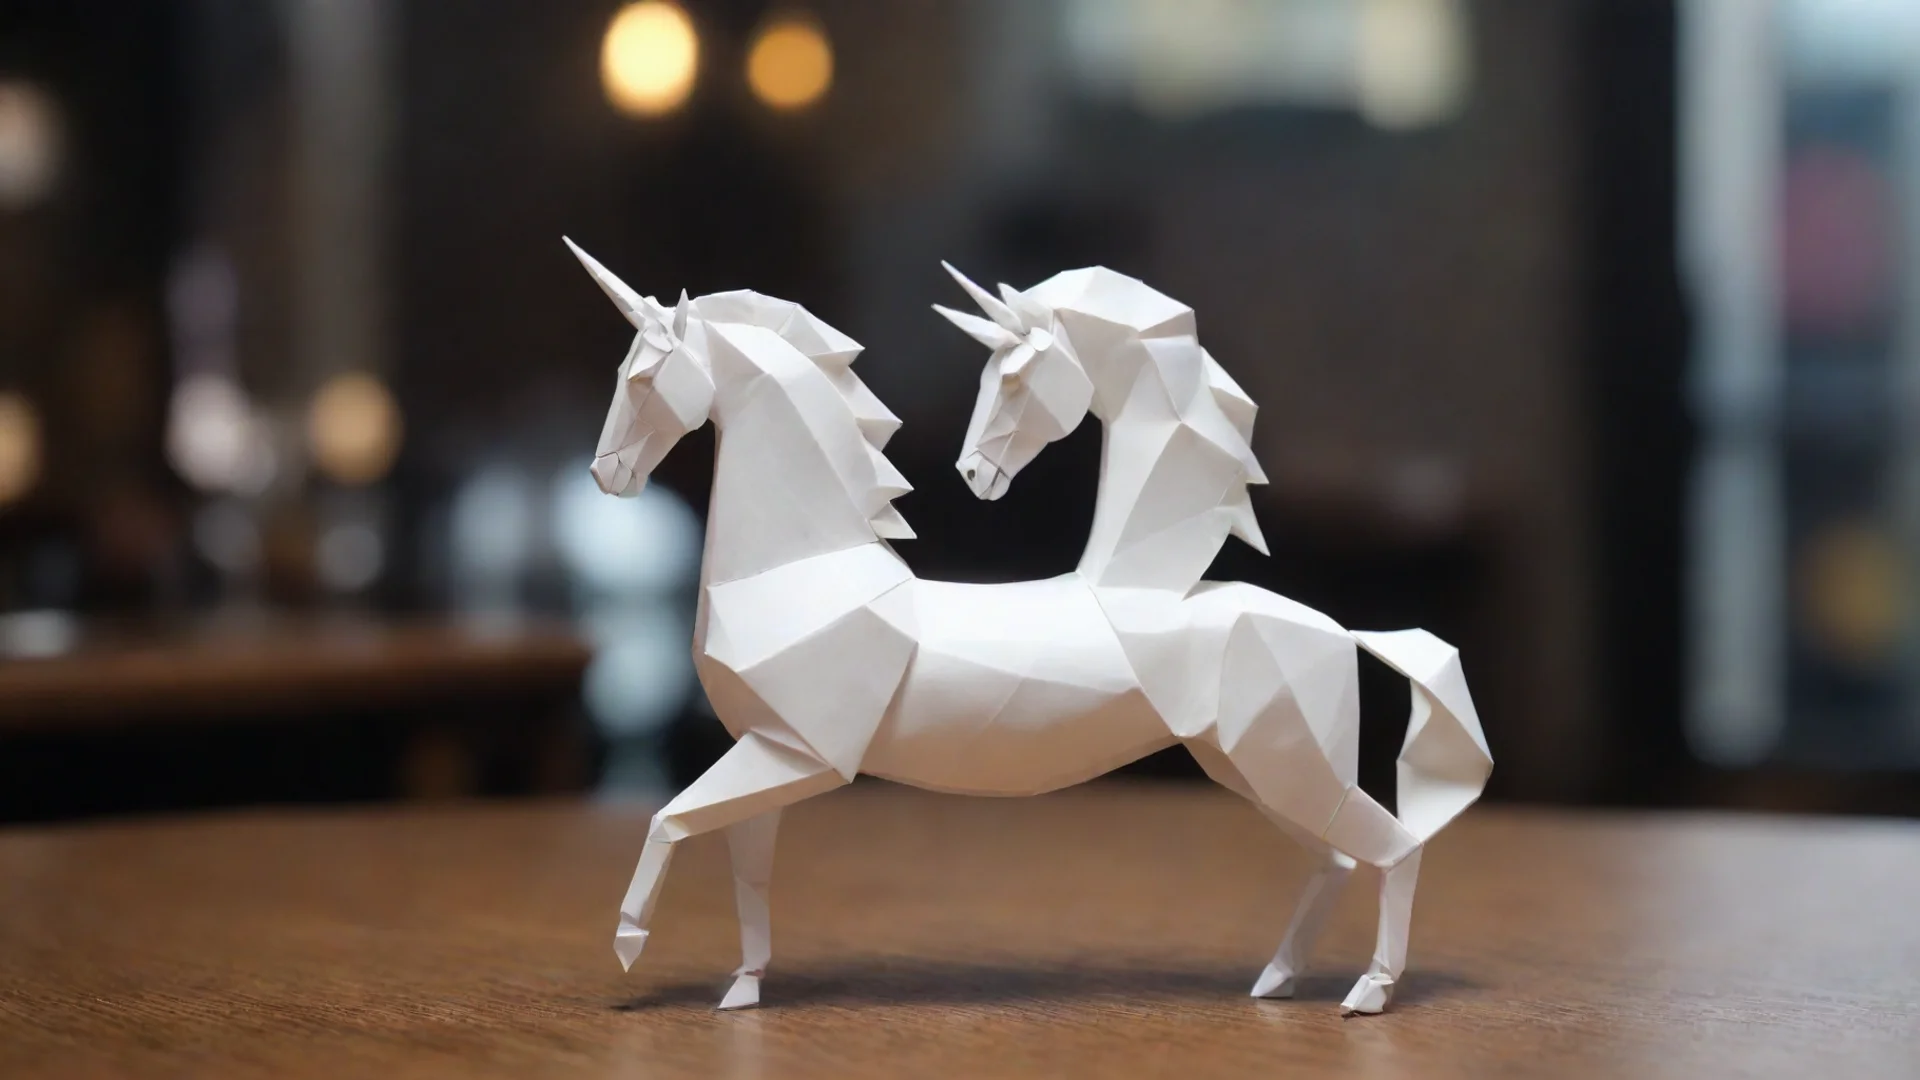 artstation art tiny full folded paper unicorn figure origami unicorn horse on a table cyberpunk crowded scifi bar gloomy melancholicult ai art generator confident engaging wow 3 wide